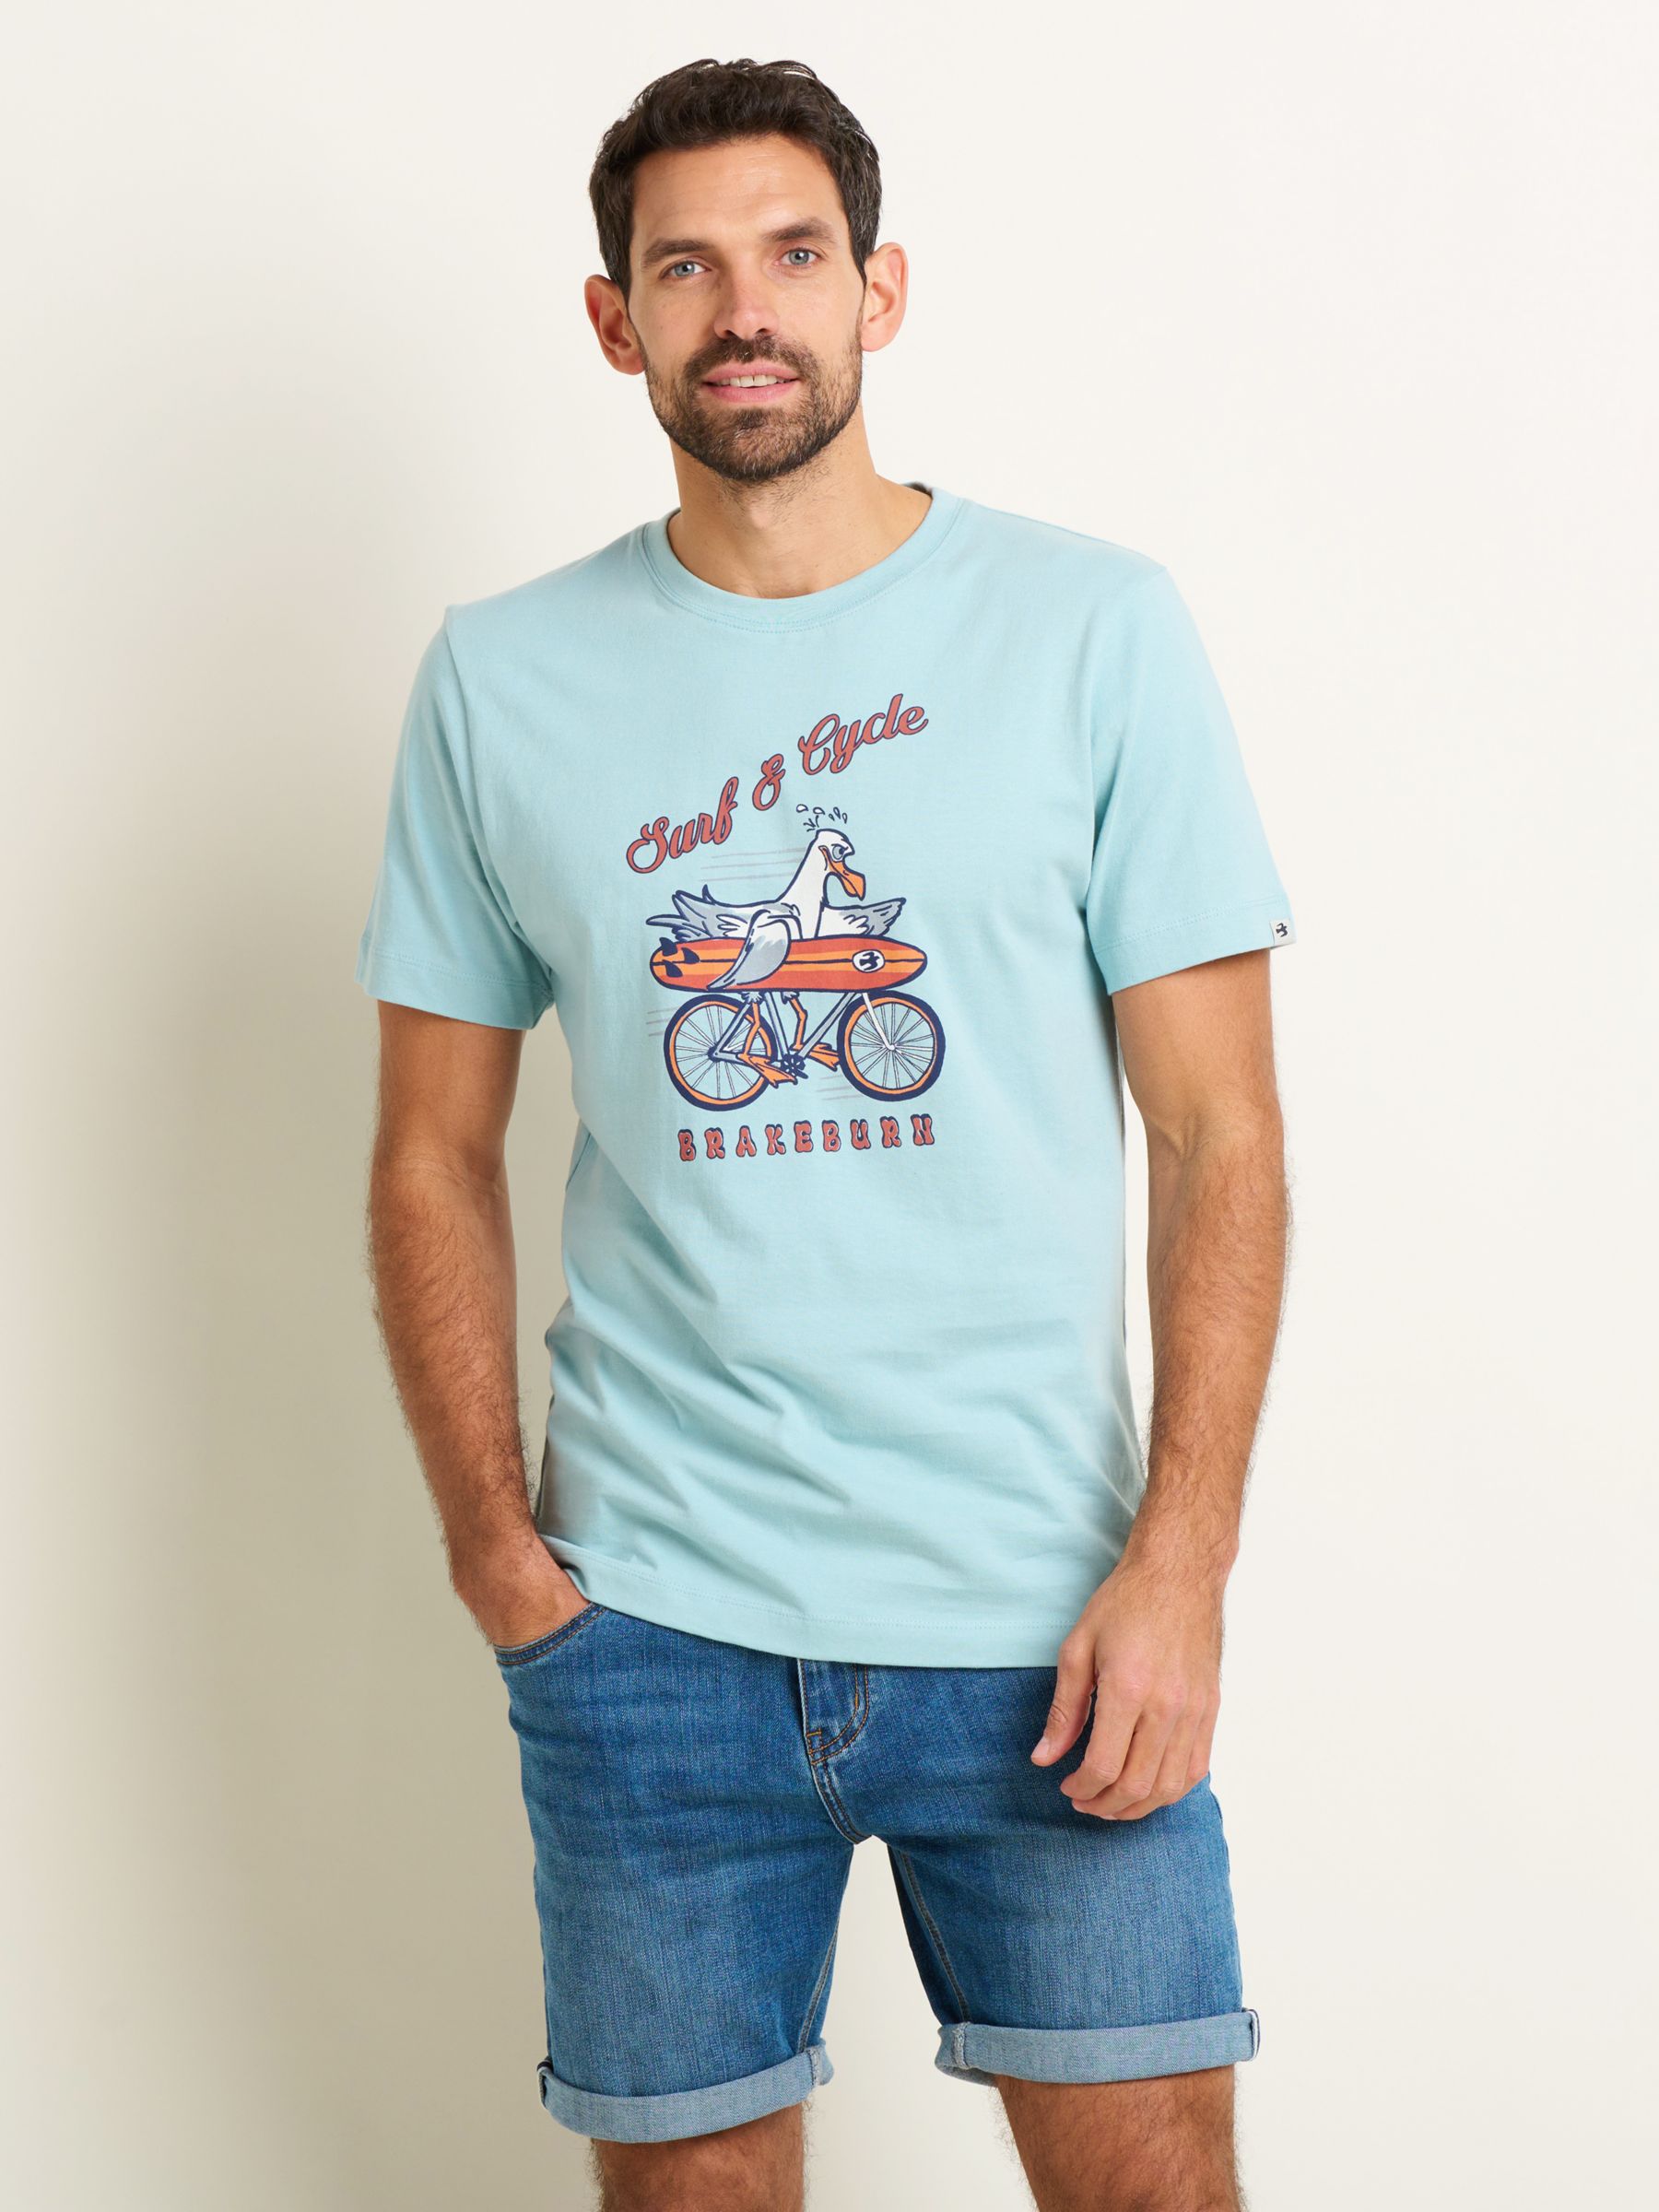 Brakeburn Seagul Graphic T-Shirt, Blue, XXL